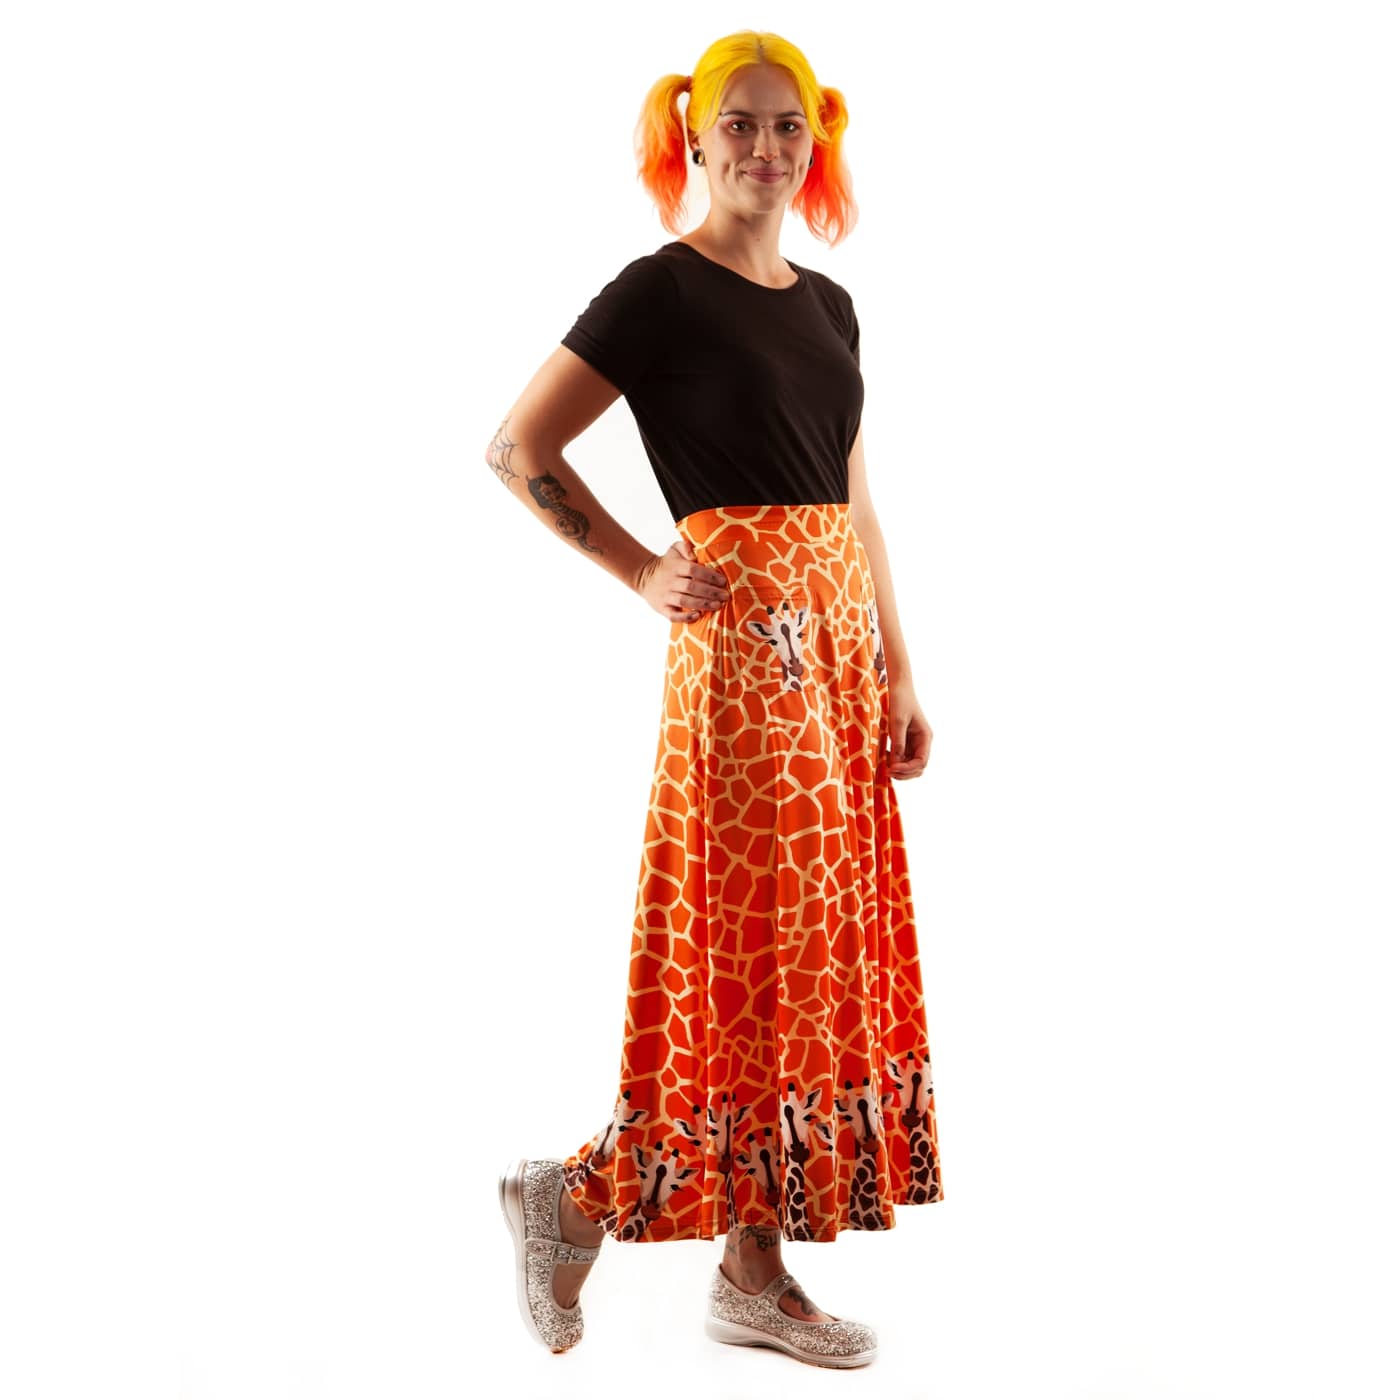 Andy Maxi Skirt by RainbowsAndFairies.com.au (Giraffe - Animal Print - Safari - Skirt With Pockets - Boho - Mod Retro - Vintage Inspired) - SKU: CL_MAXIS_ANDYG_ORG - Pic-04